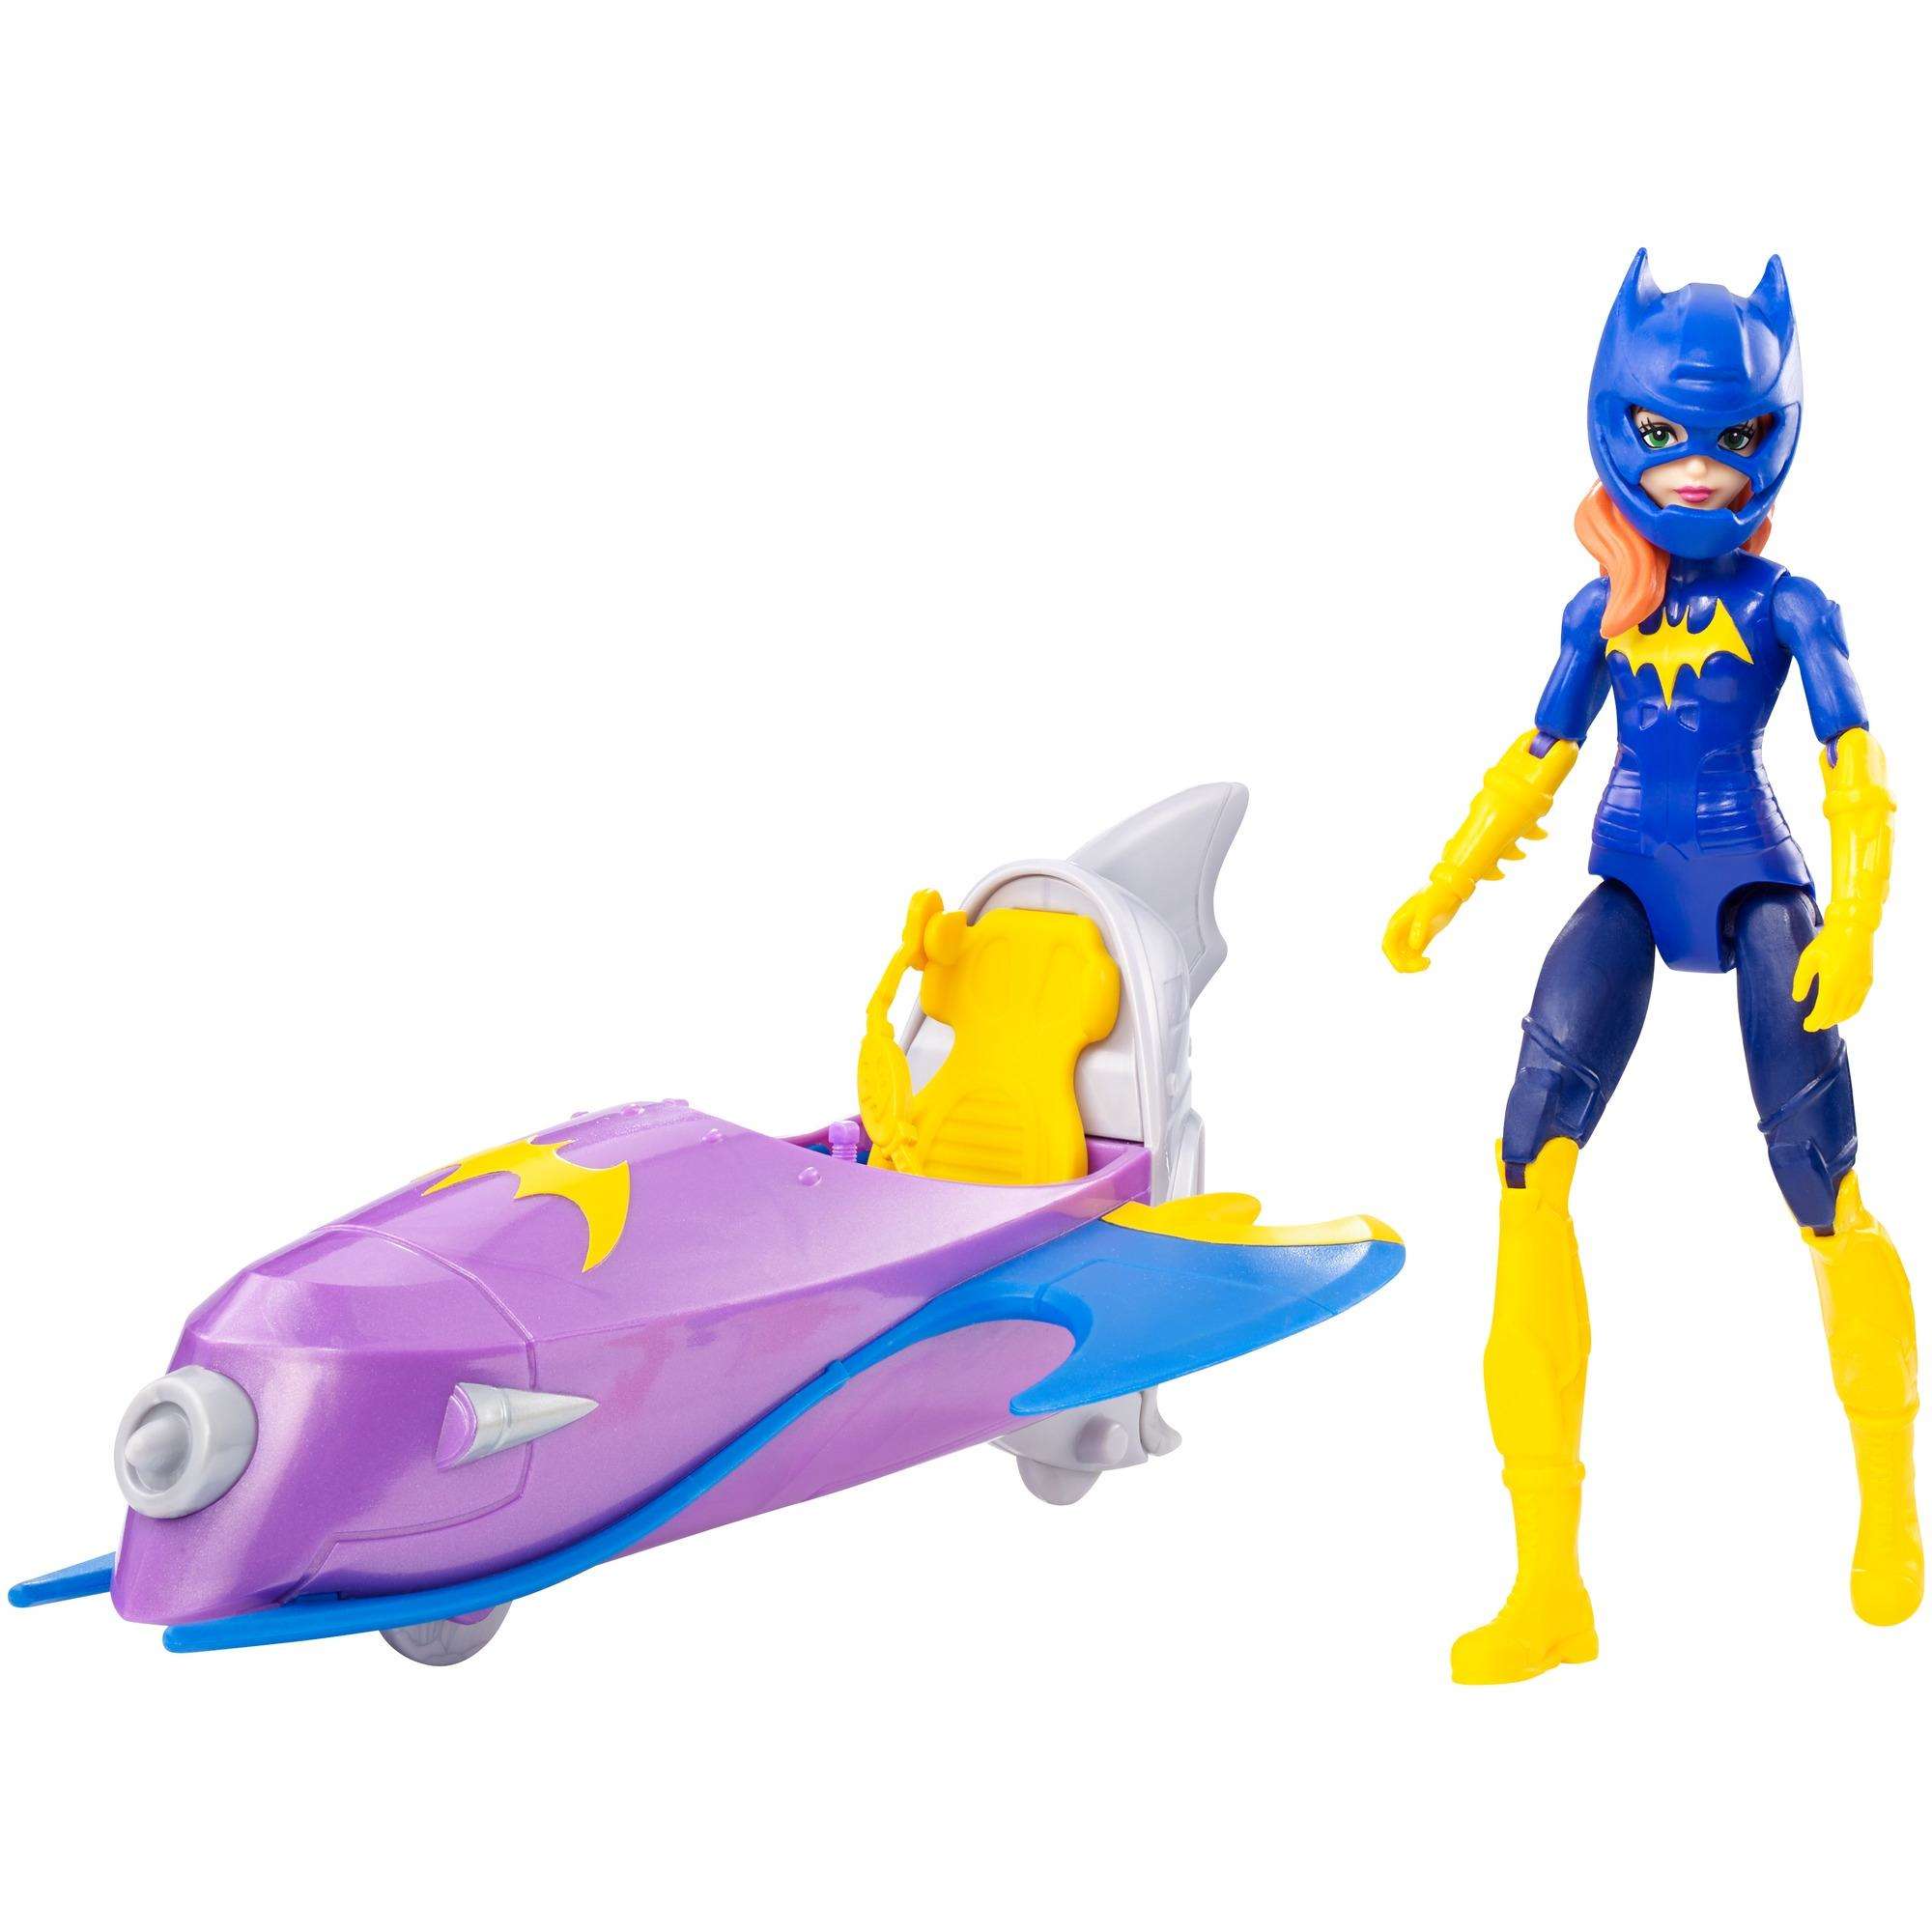 DC Super Hero Girls Batgirl 6-Inch Action Figure with Batjet - image 1 of 8